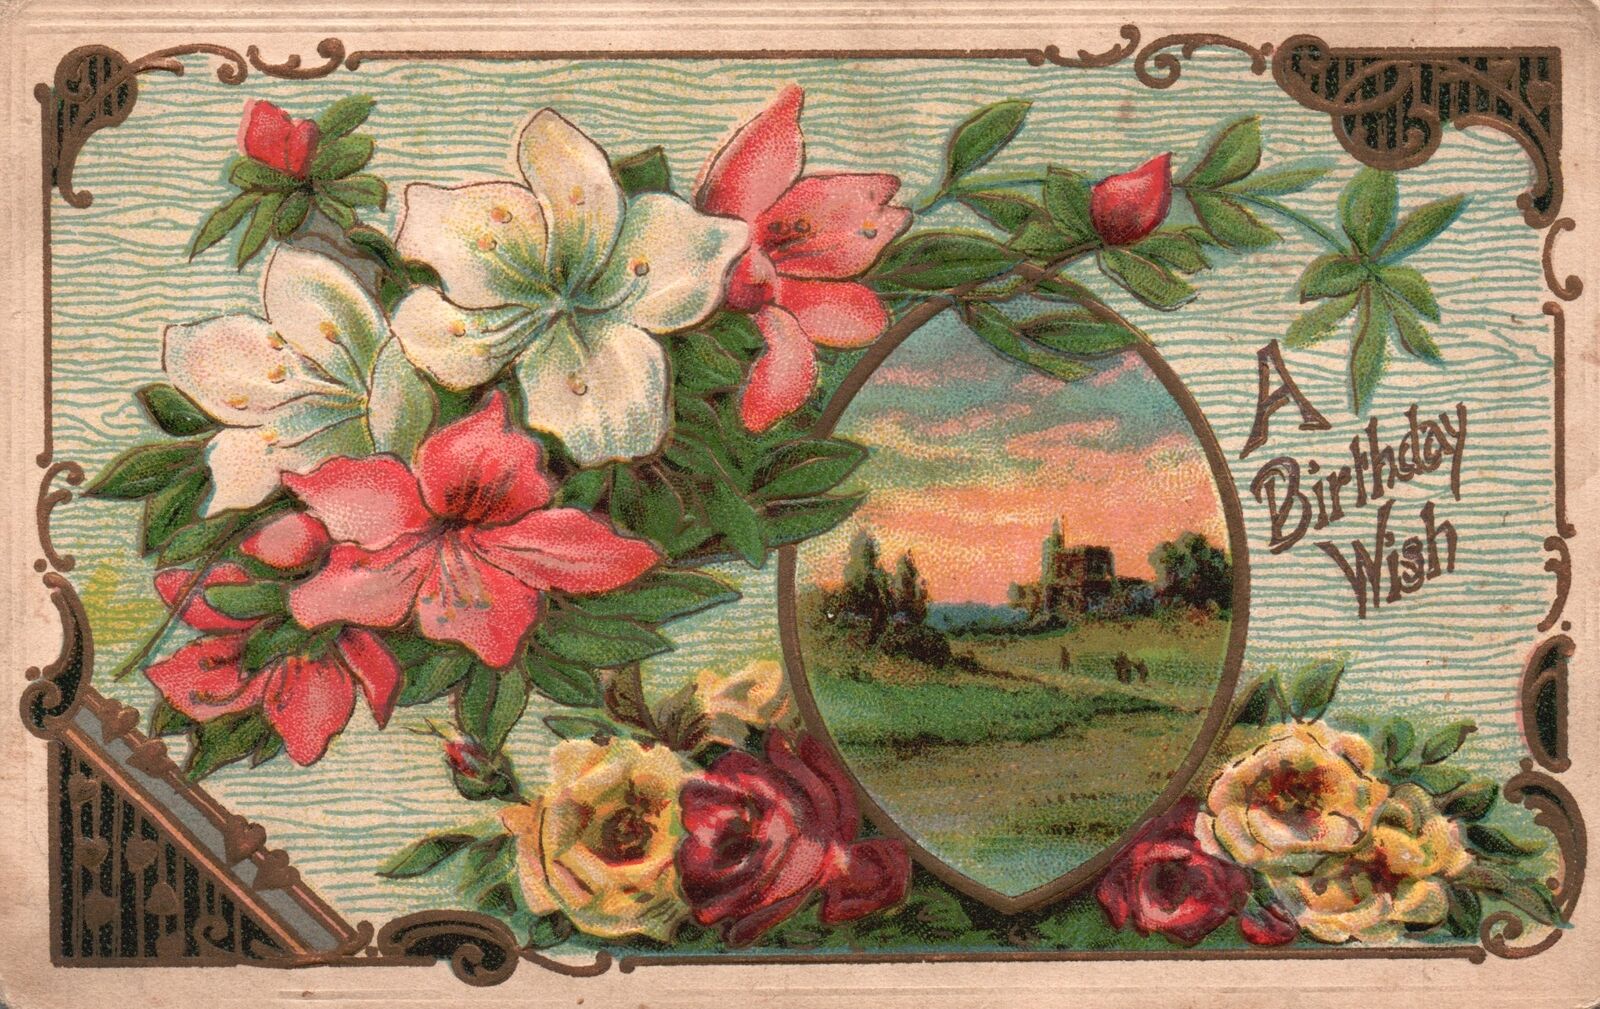 Vintage Postcard A Happy Birthday Wish Landscape Flowers Calligraphic Border